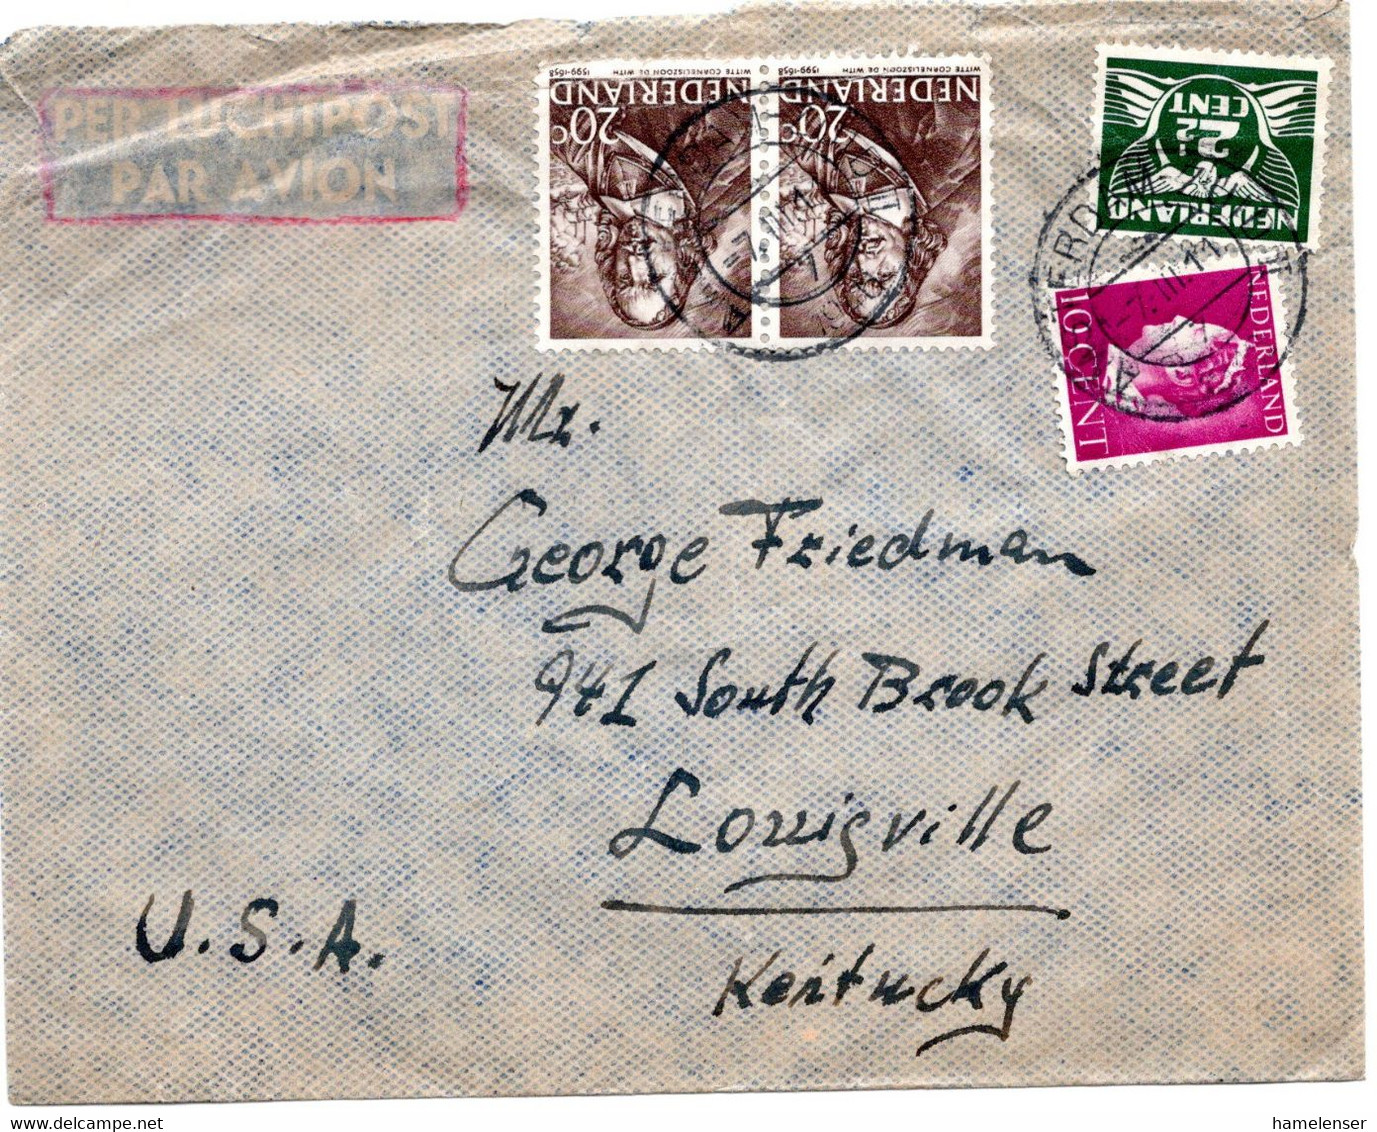 61062 - Niederlande - 1946 - 2@20c Seefahrer MiF A LpBf AMSTERDAM -> Louisville, KY (USA) - Lettres & Documents